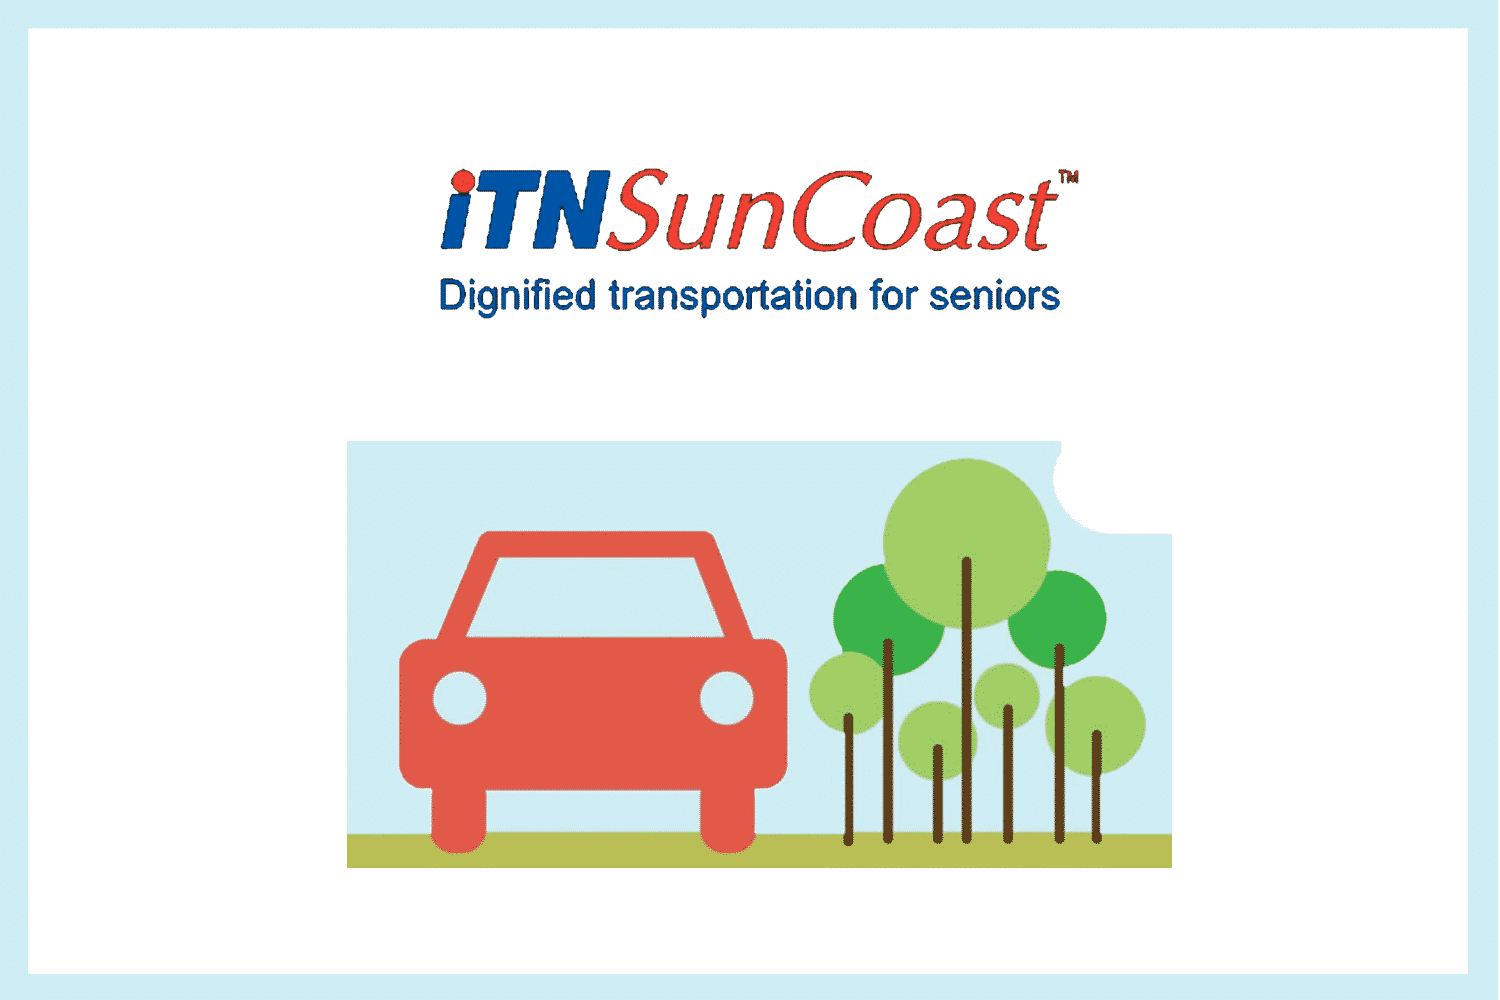 iTN SunCoast: Providing Dignified Transportation for Seniors